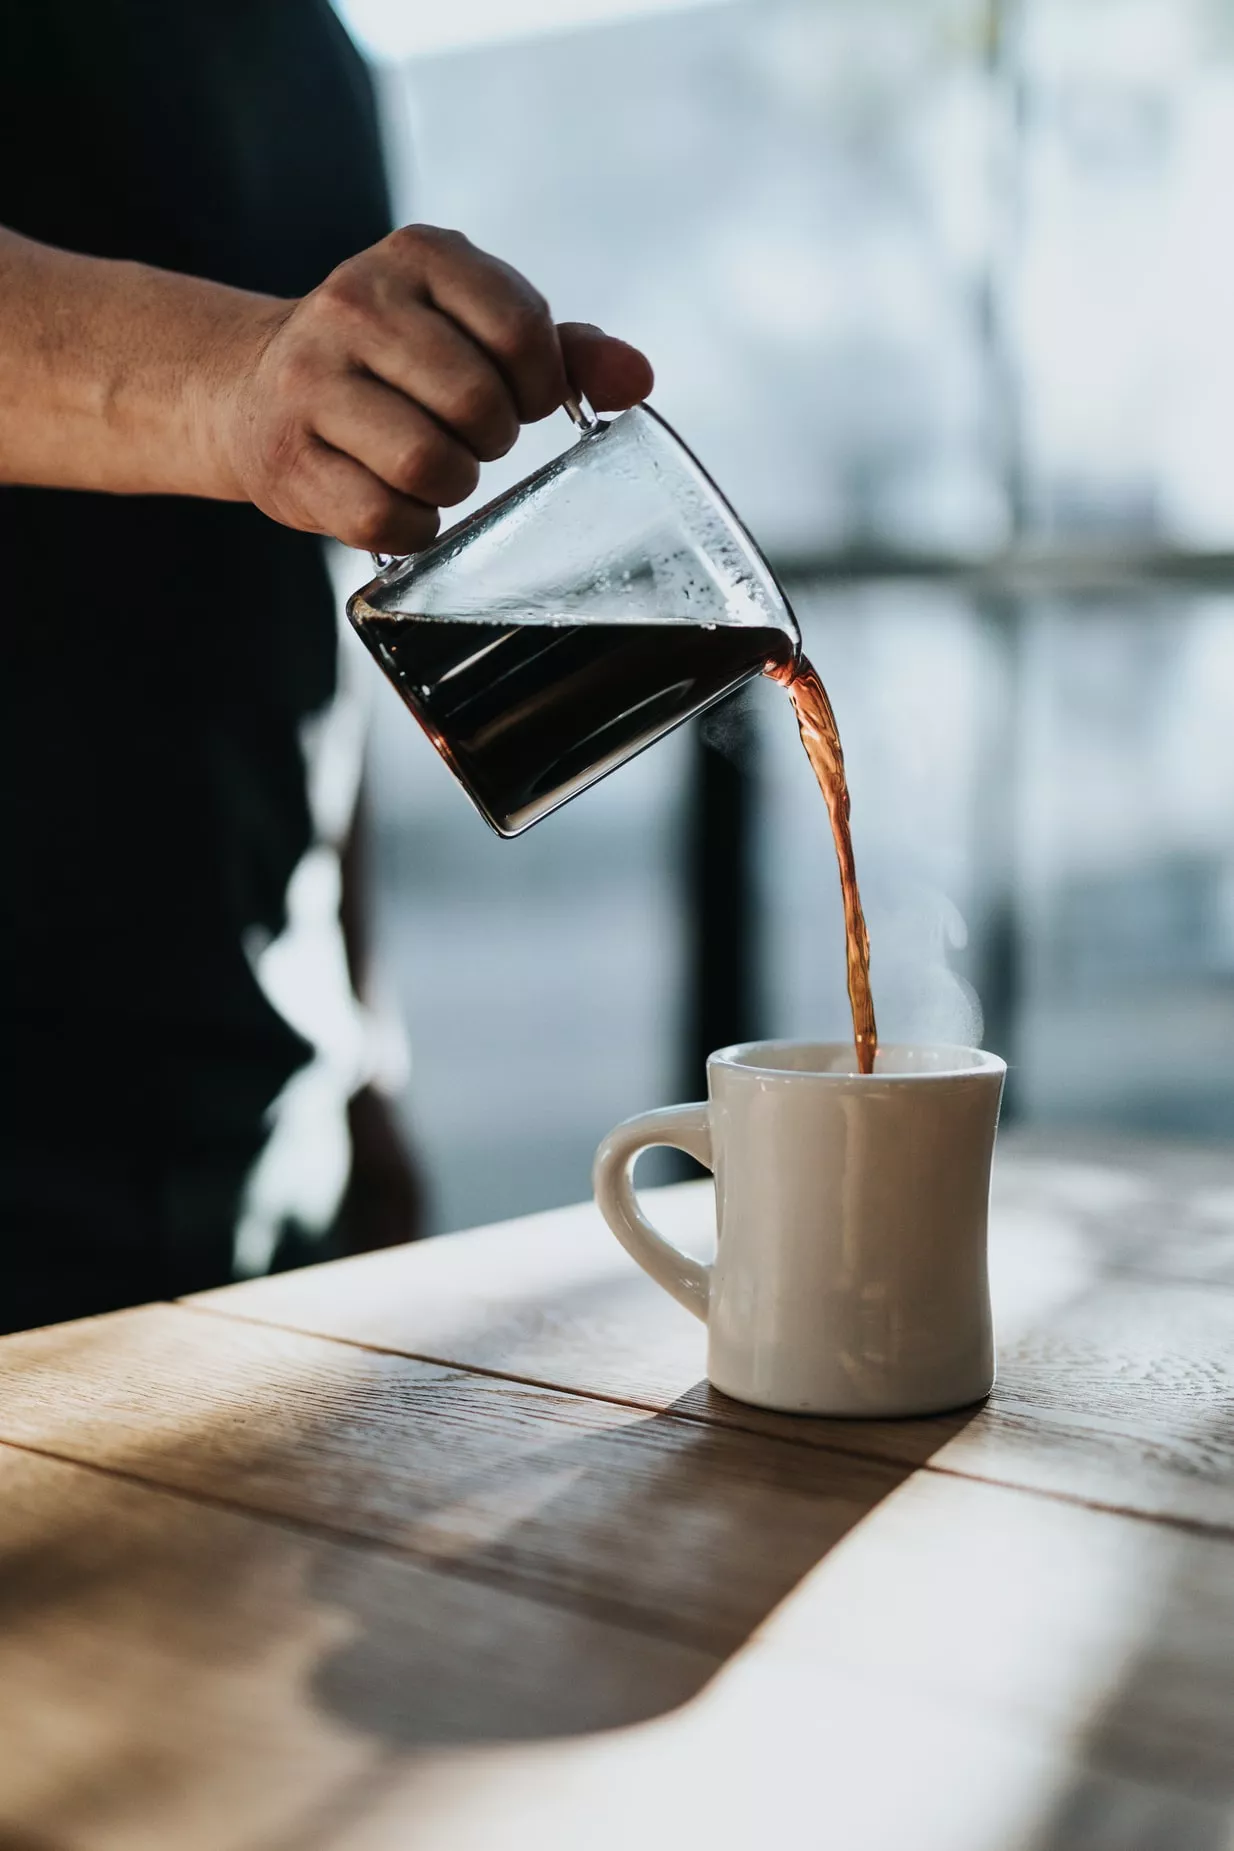 Coffee may increase SHBG